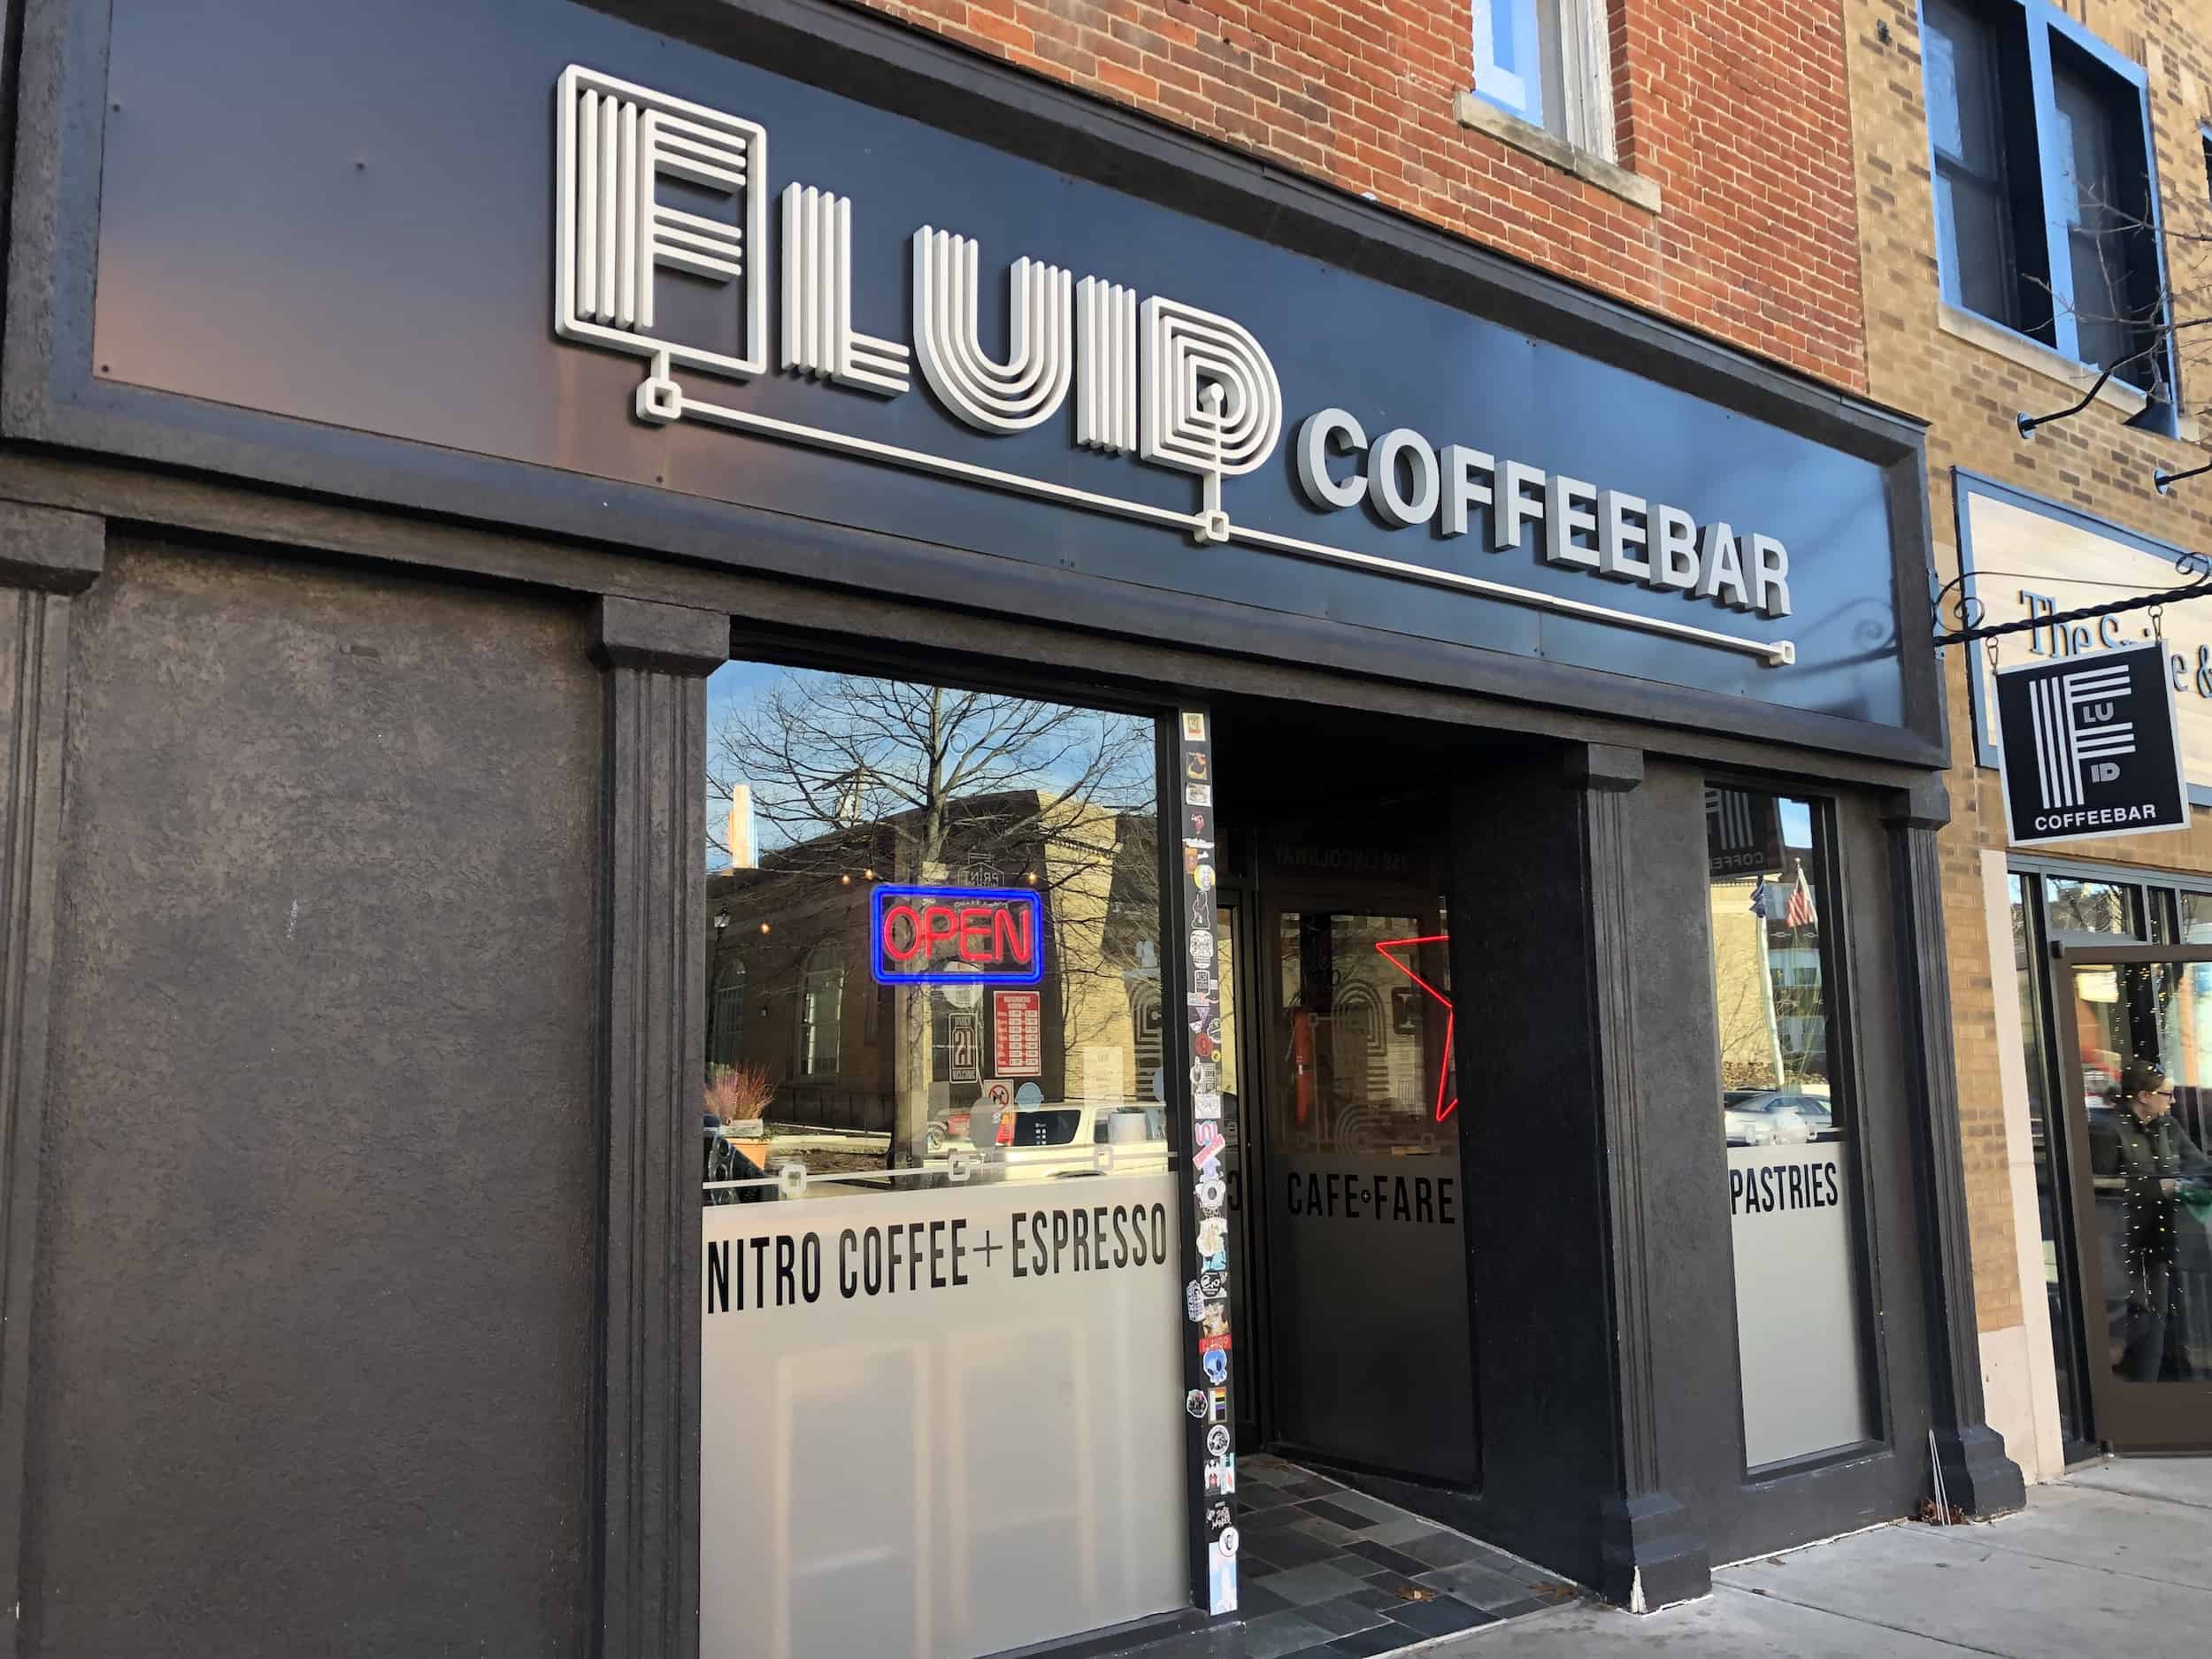 FLUID Coffeebar in downtown Valparaiso, Indiana